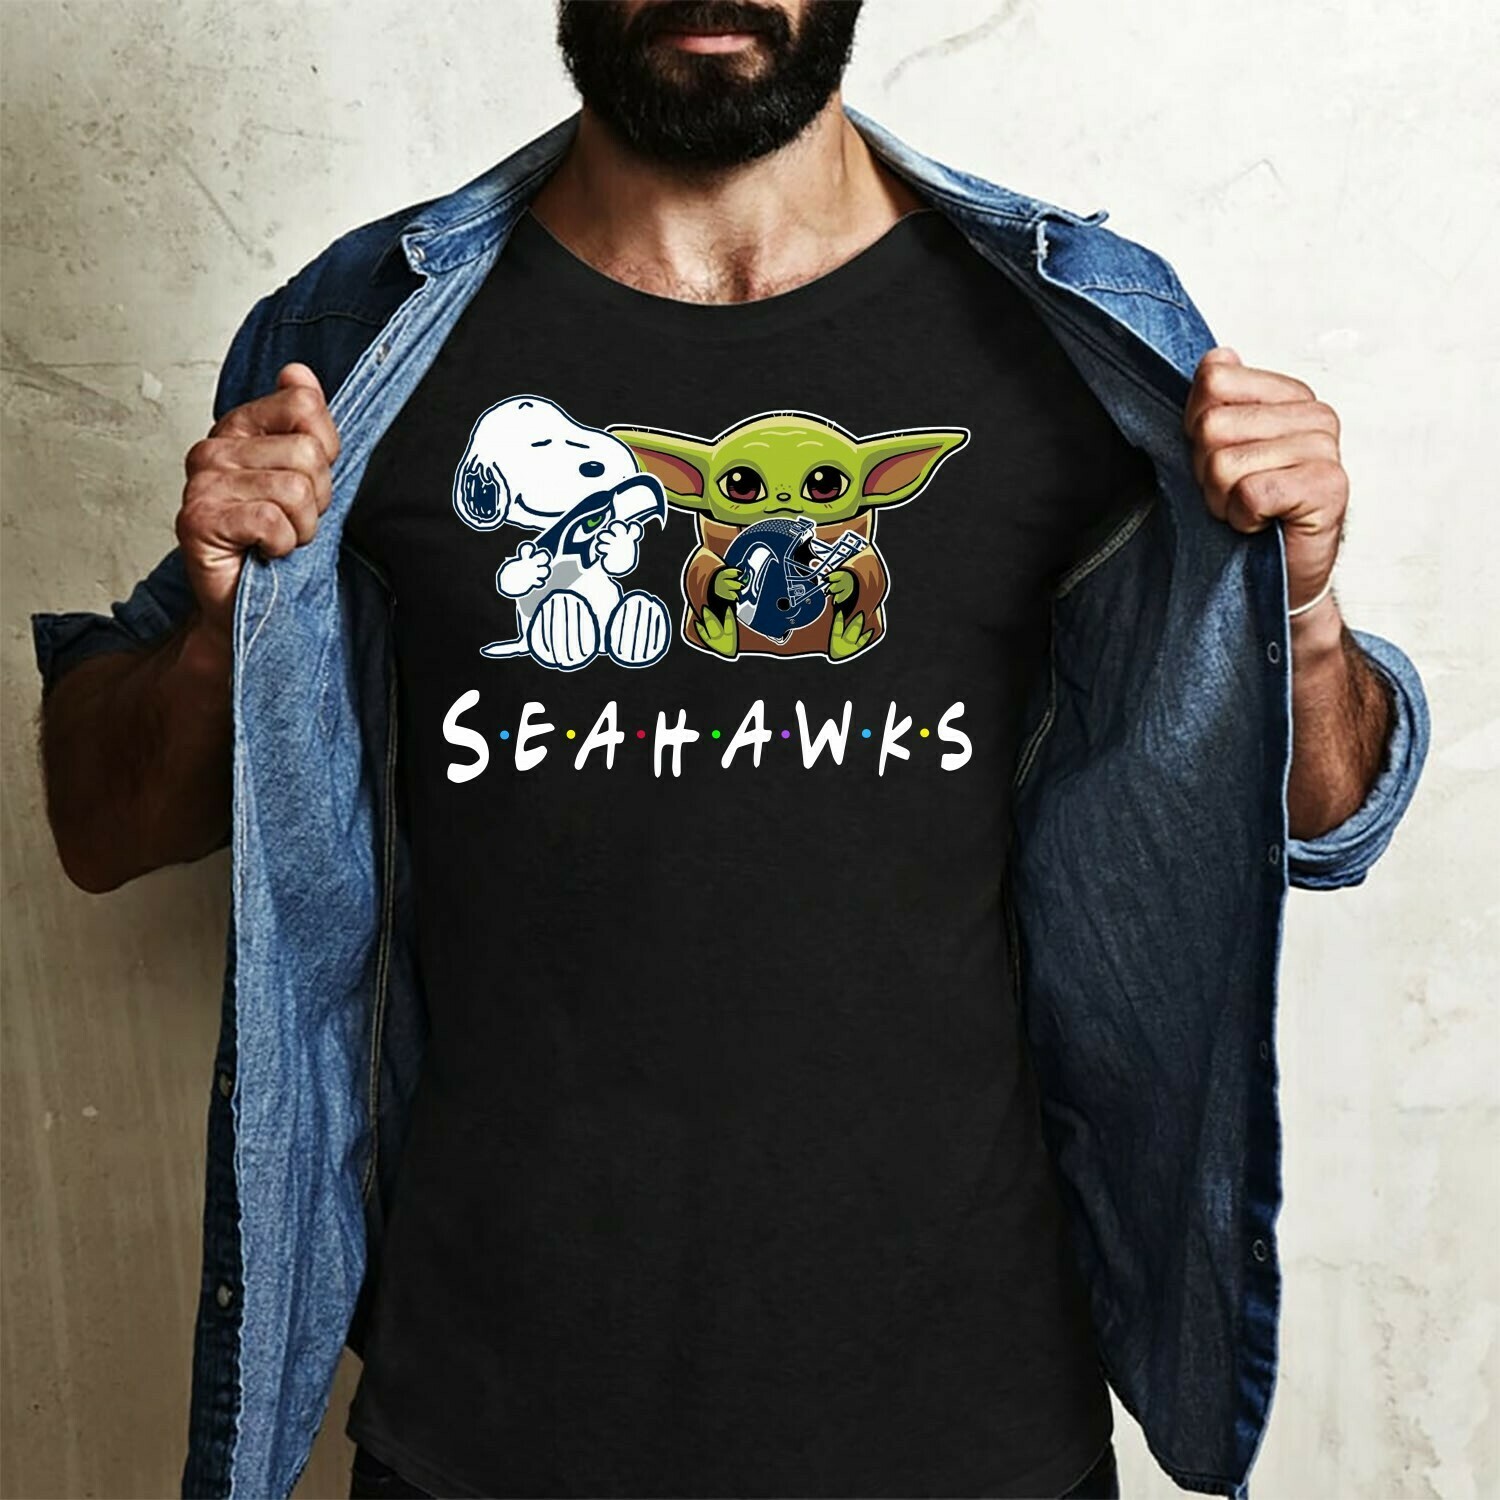 seattle seahawks shirts kids